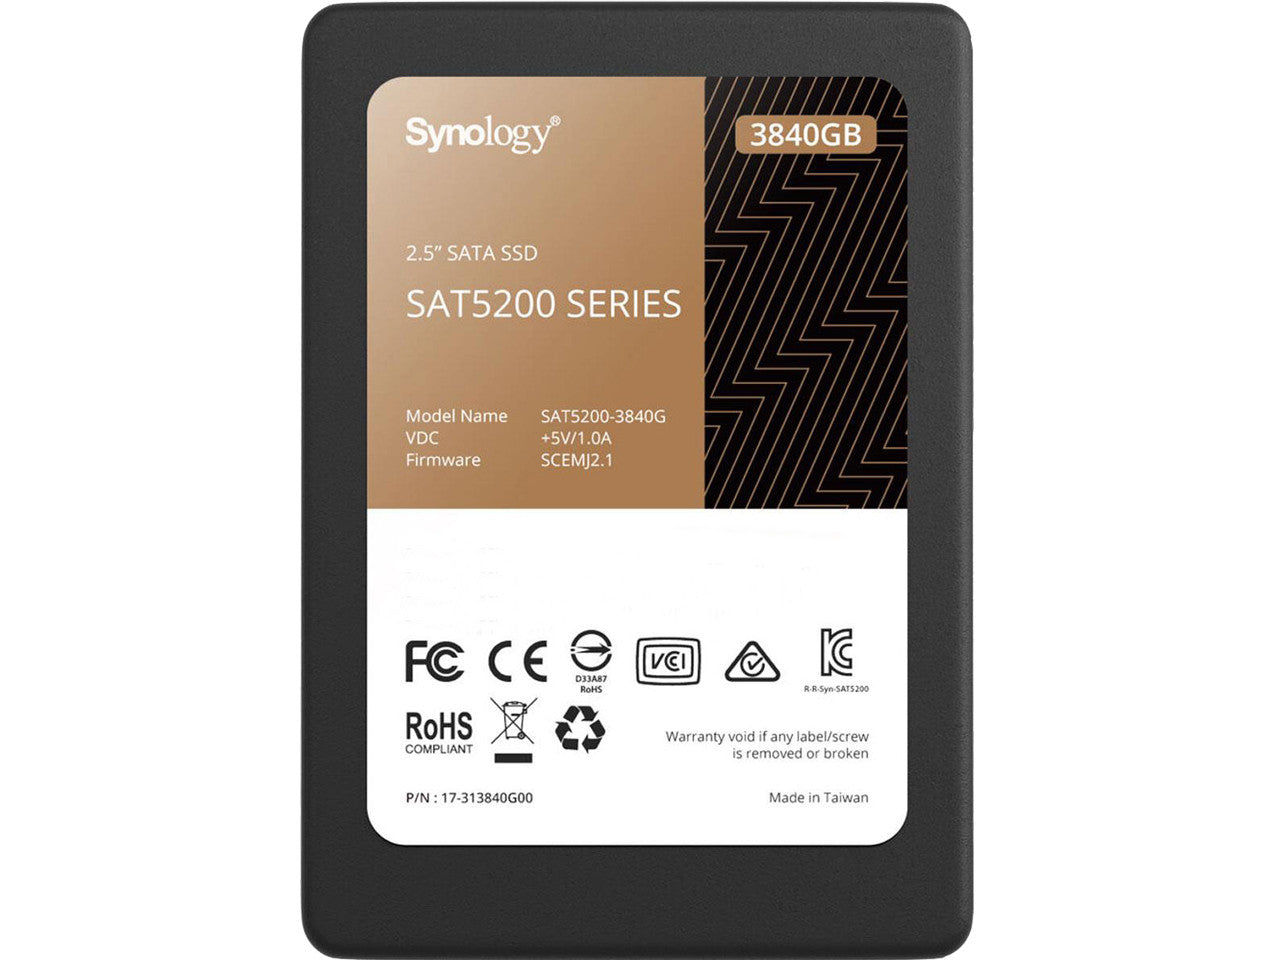 Synology SAT5200-3840G 3840GB 2.5" SATA SSD